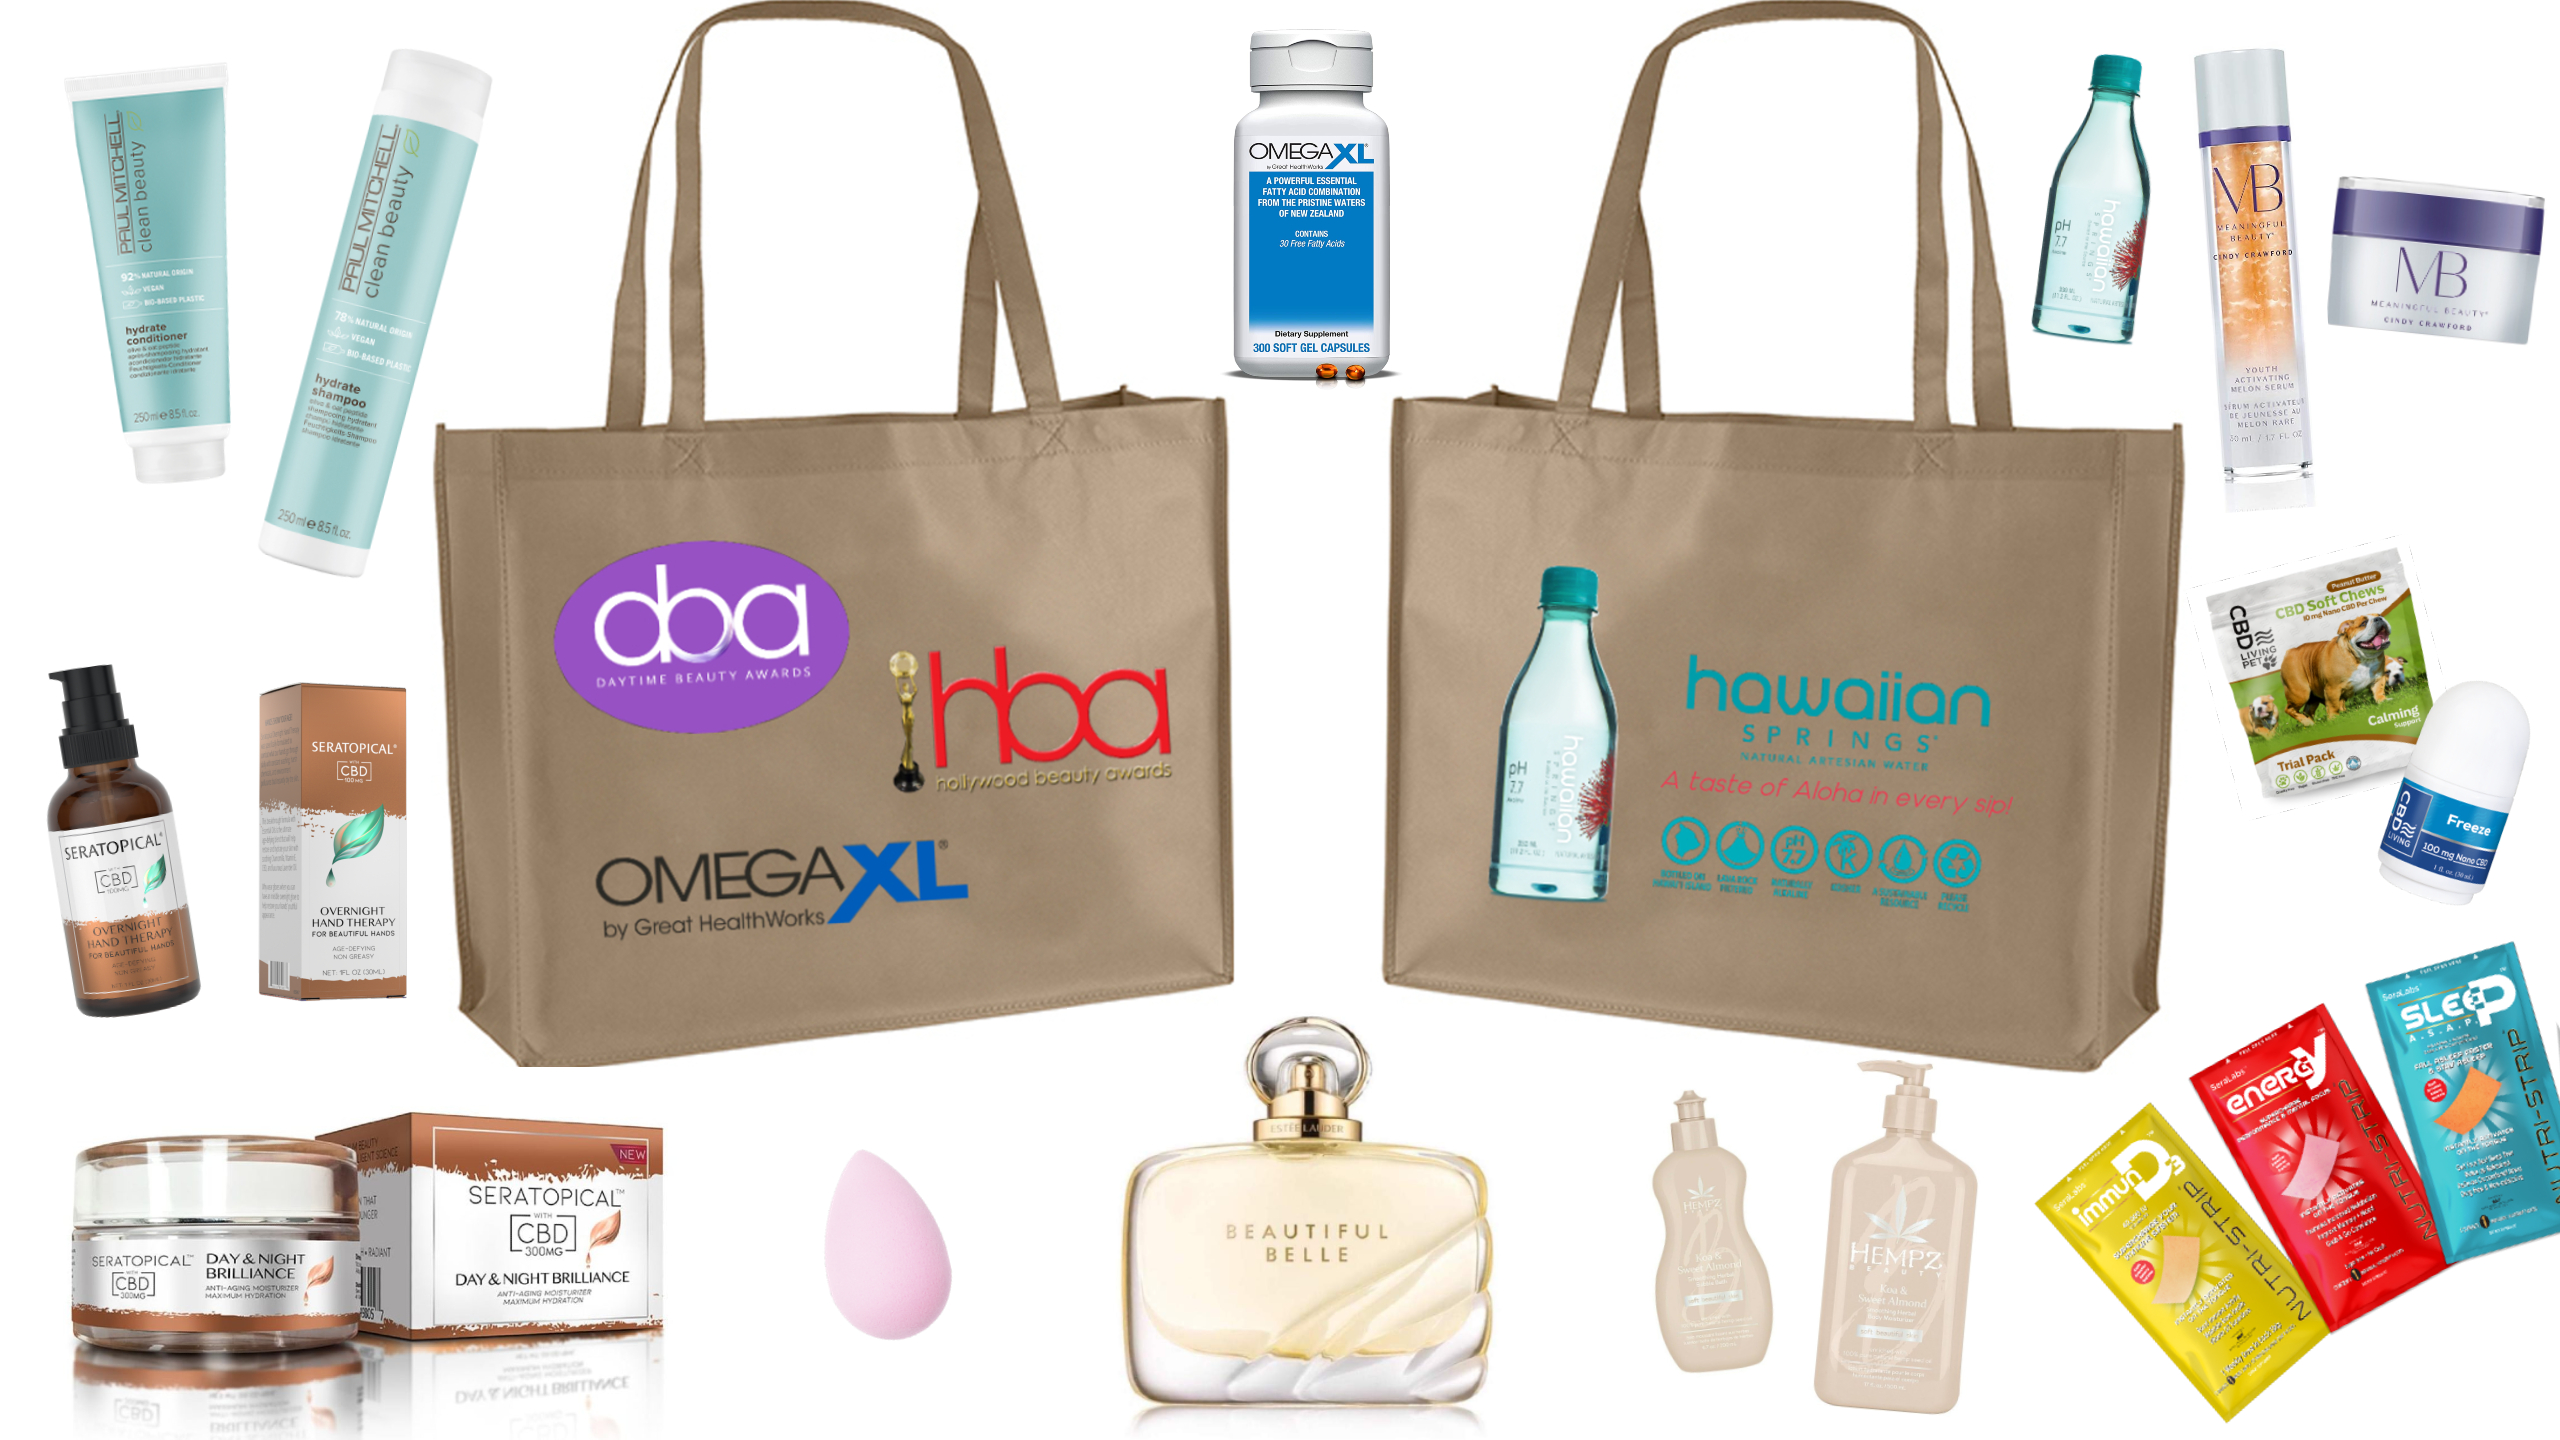 2021 daytime beauty awards gift bag, omega xl, hawaiian springs